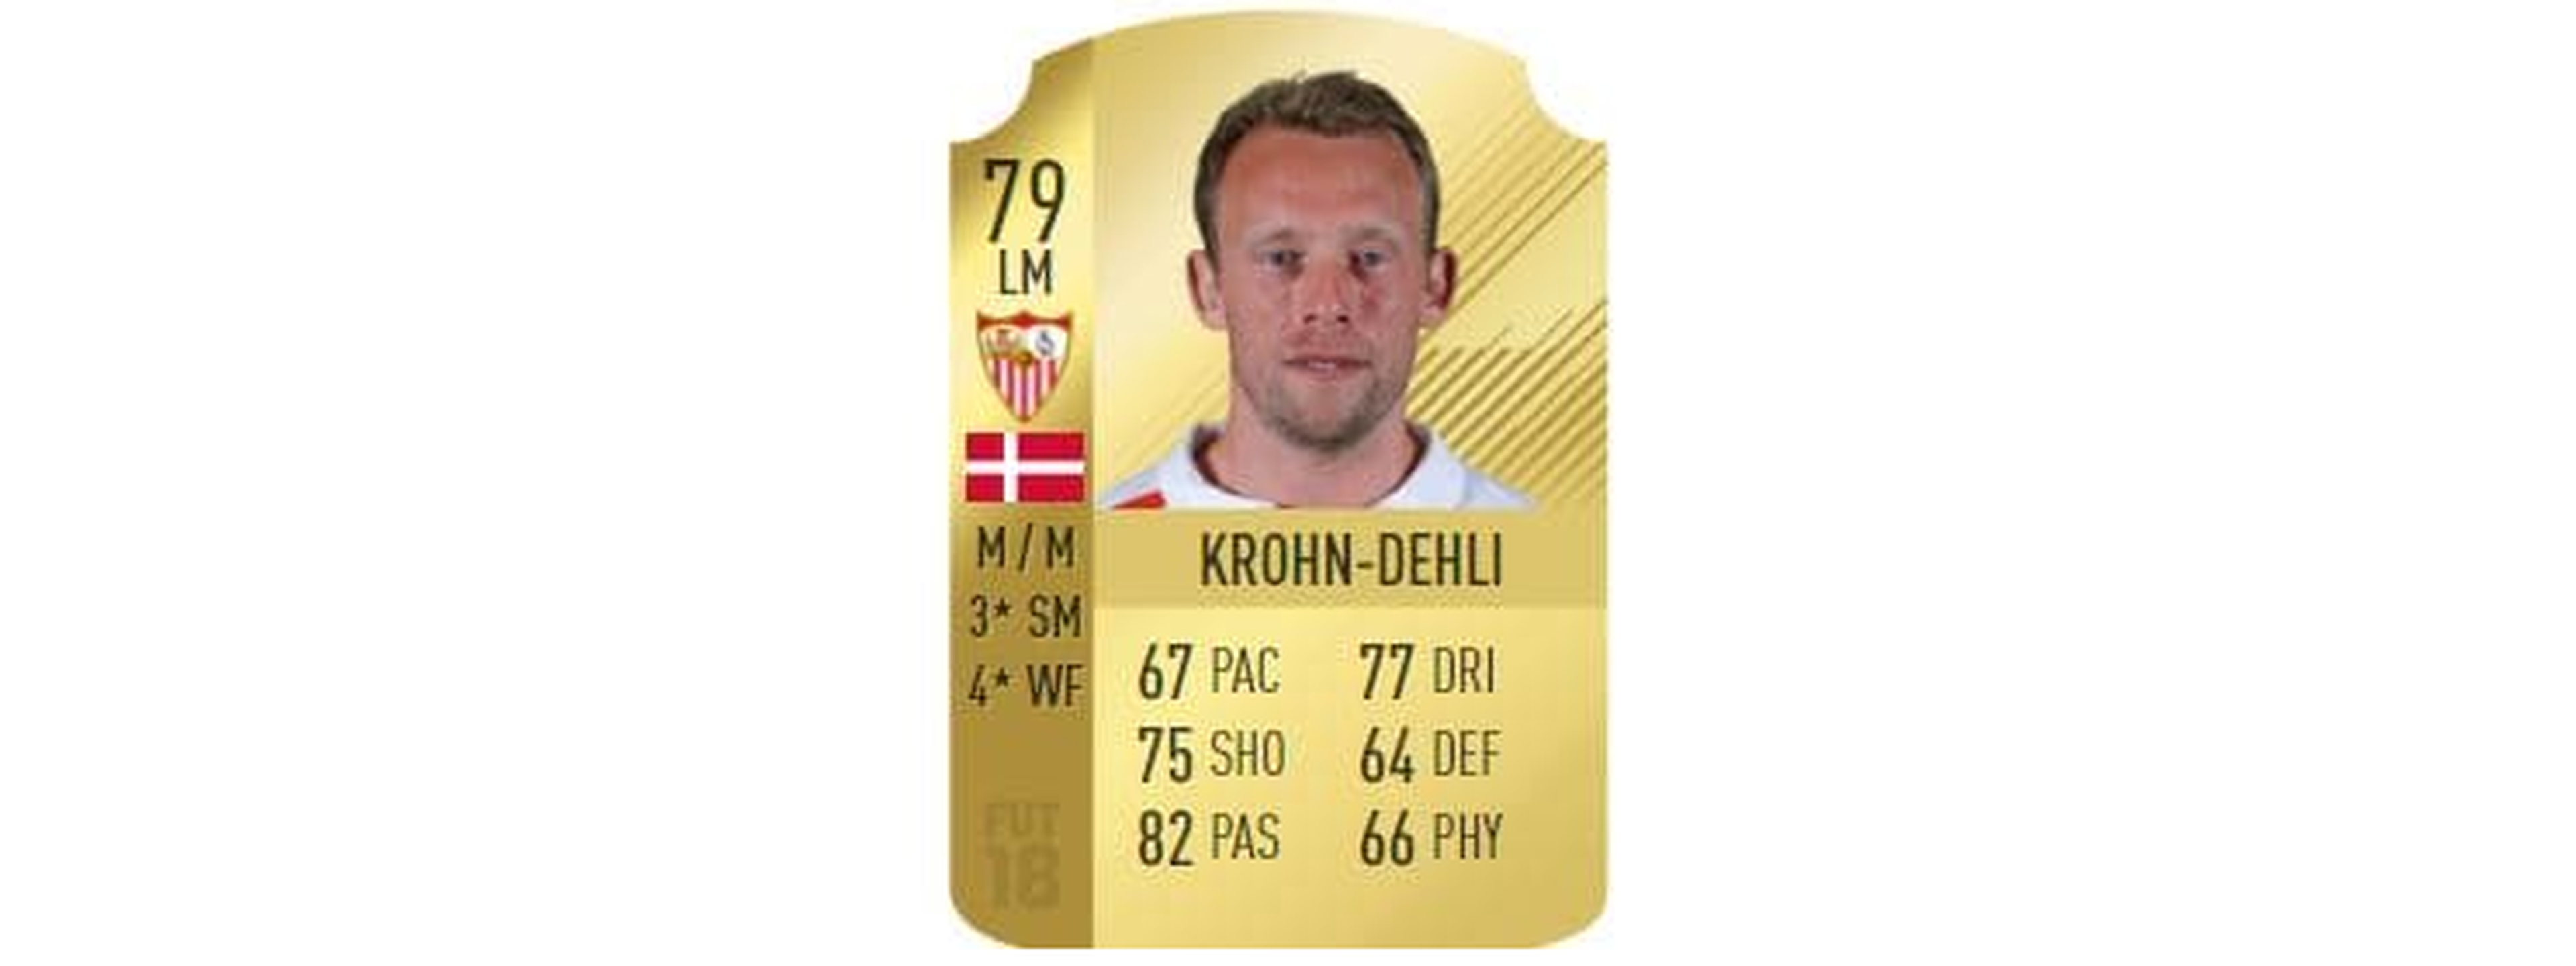 FIFA 18 - Krohn-Dehli